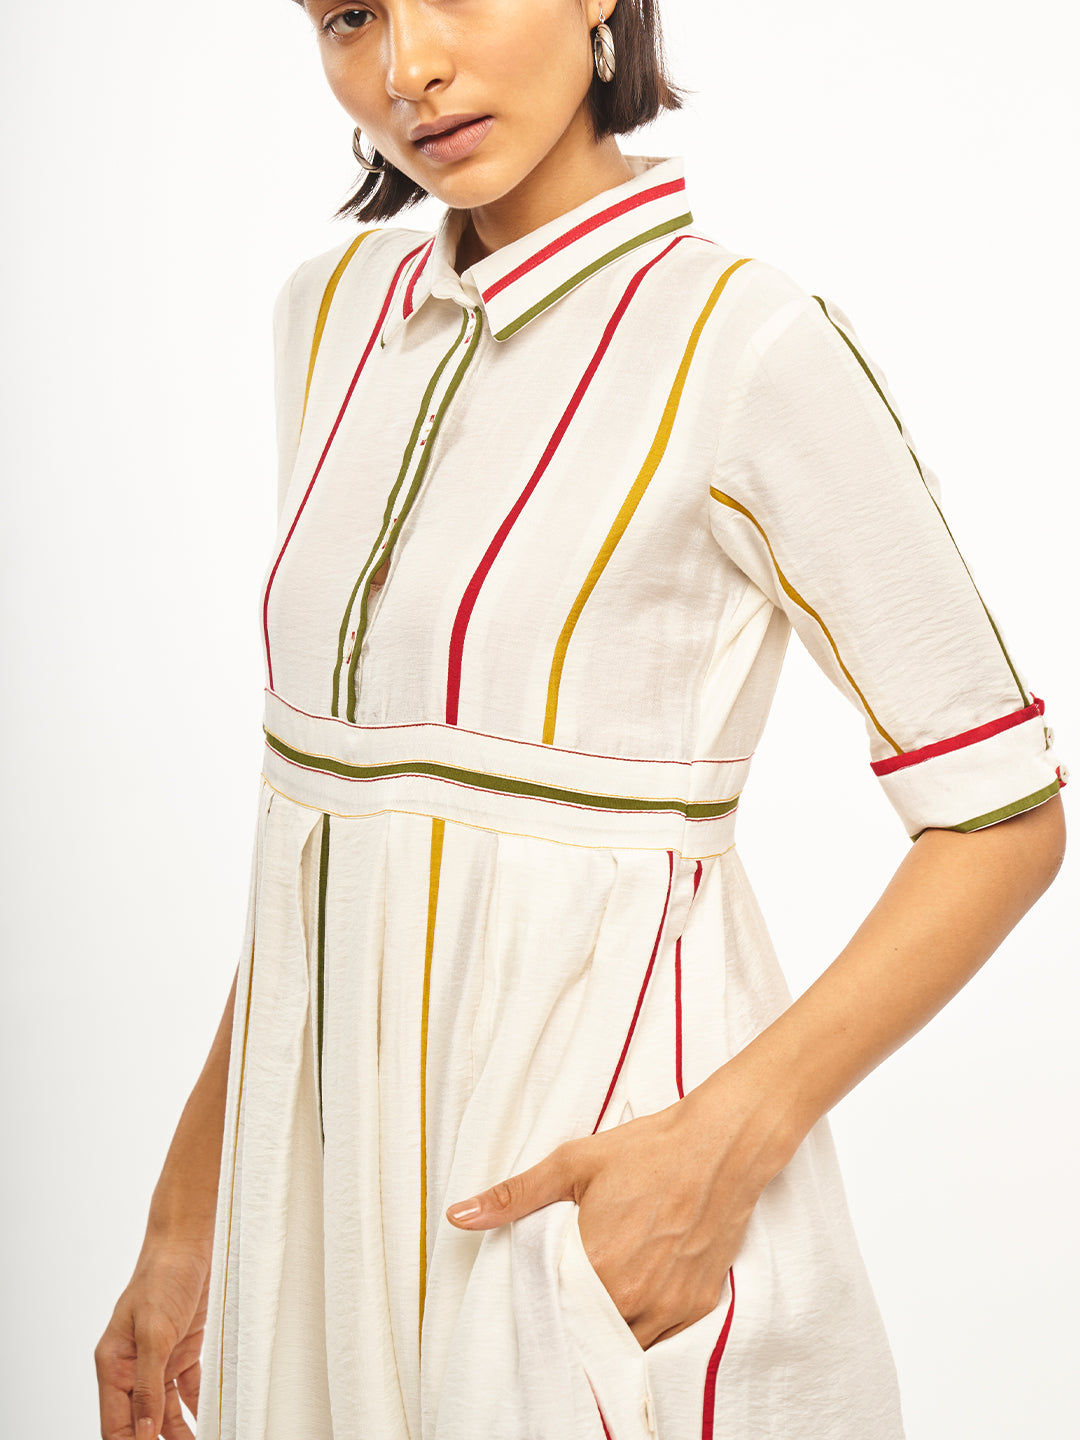 Stripe Printed Flared Dress - ARH738